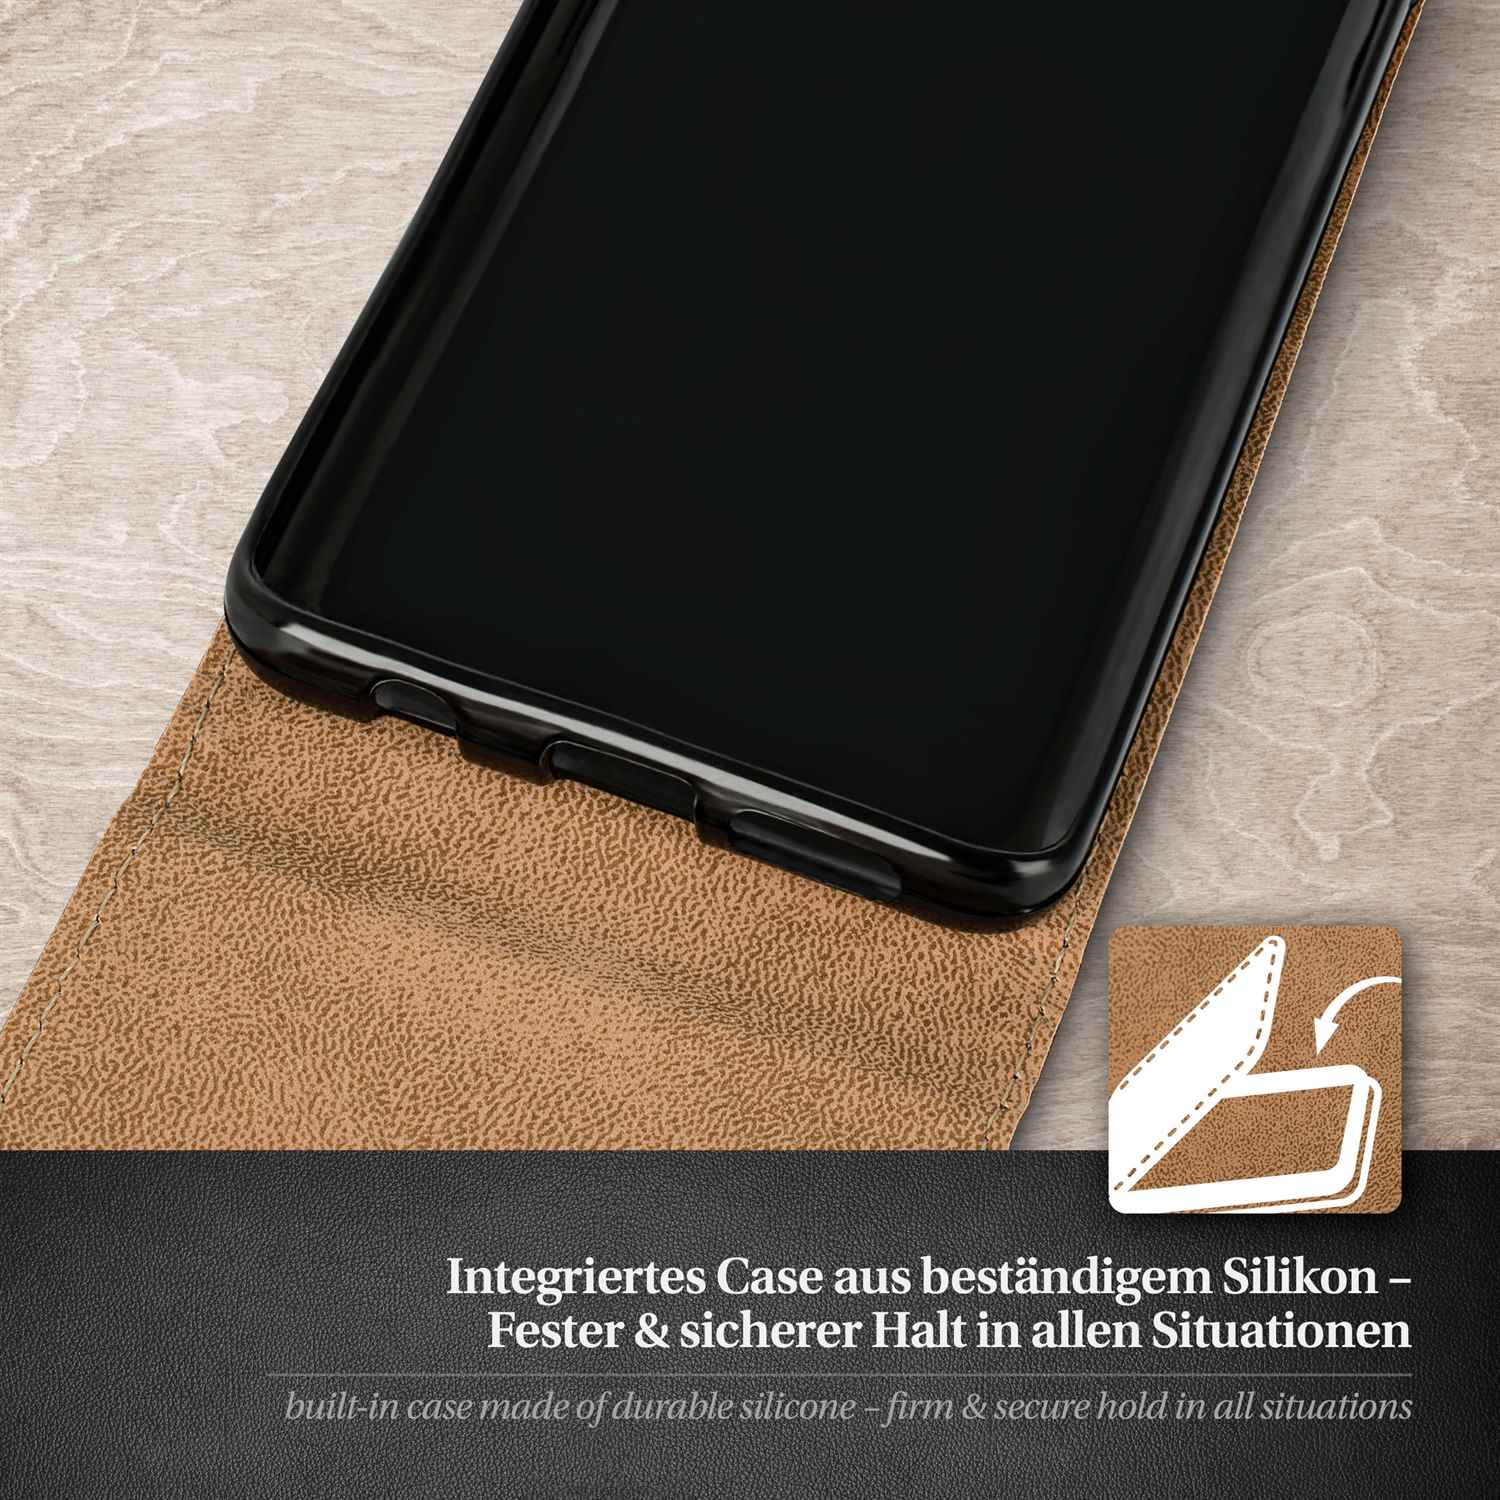 MOEX Flip Case, Flip Cover, S20, Berry-Fuchsia Galaxy Samsung